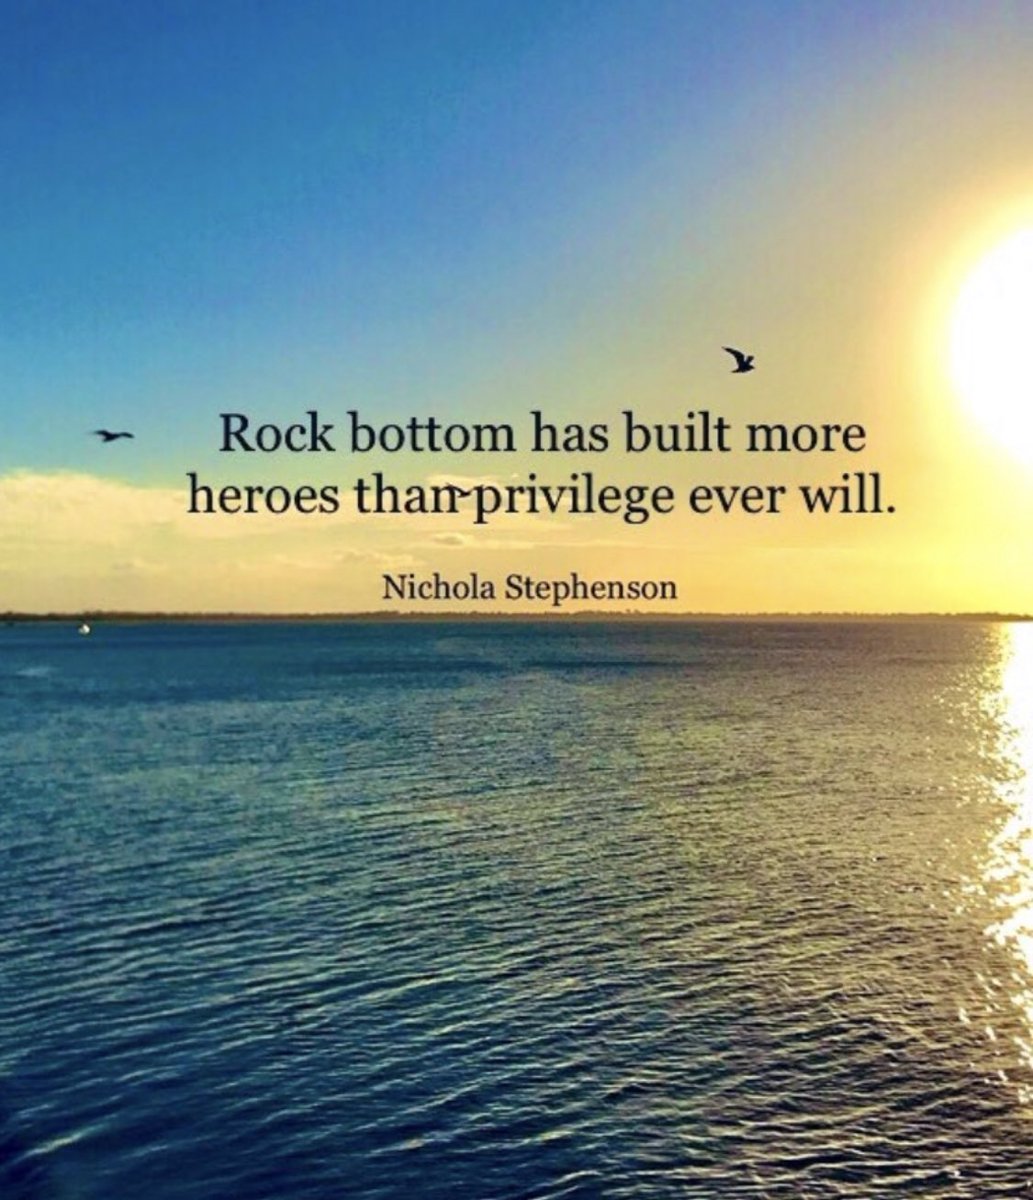 Rock bottom has built more heroes than privilege ever will 💫

#positive #mentalhealth #mindset #JoyTrain #success #SuccessTrain #ThinkBIGSundayWithMarsha #thrivetogether #thinkbig